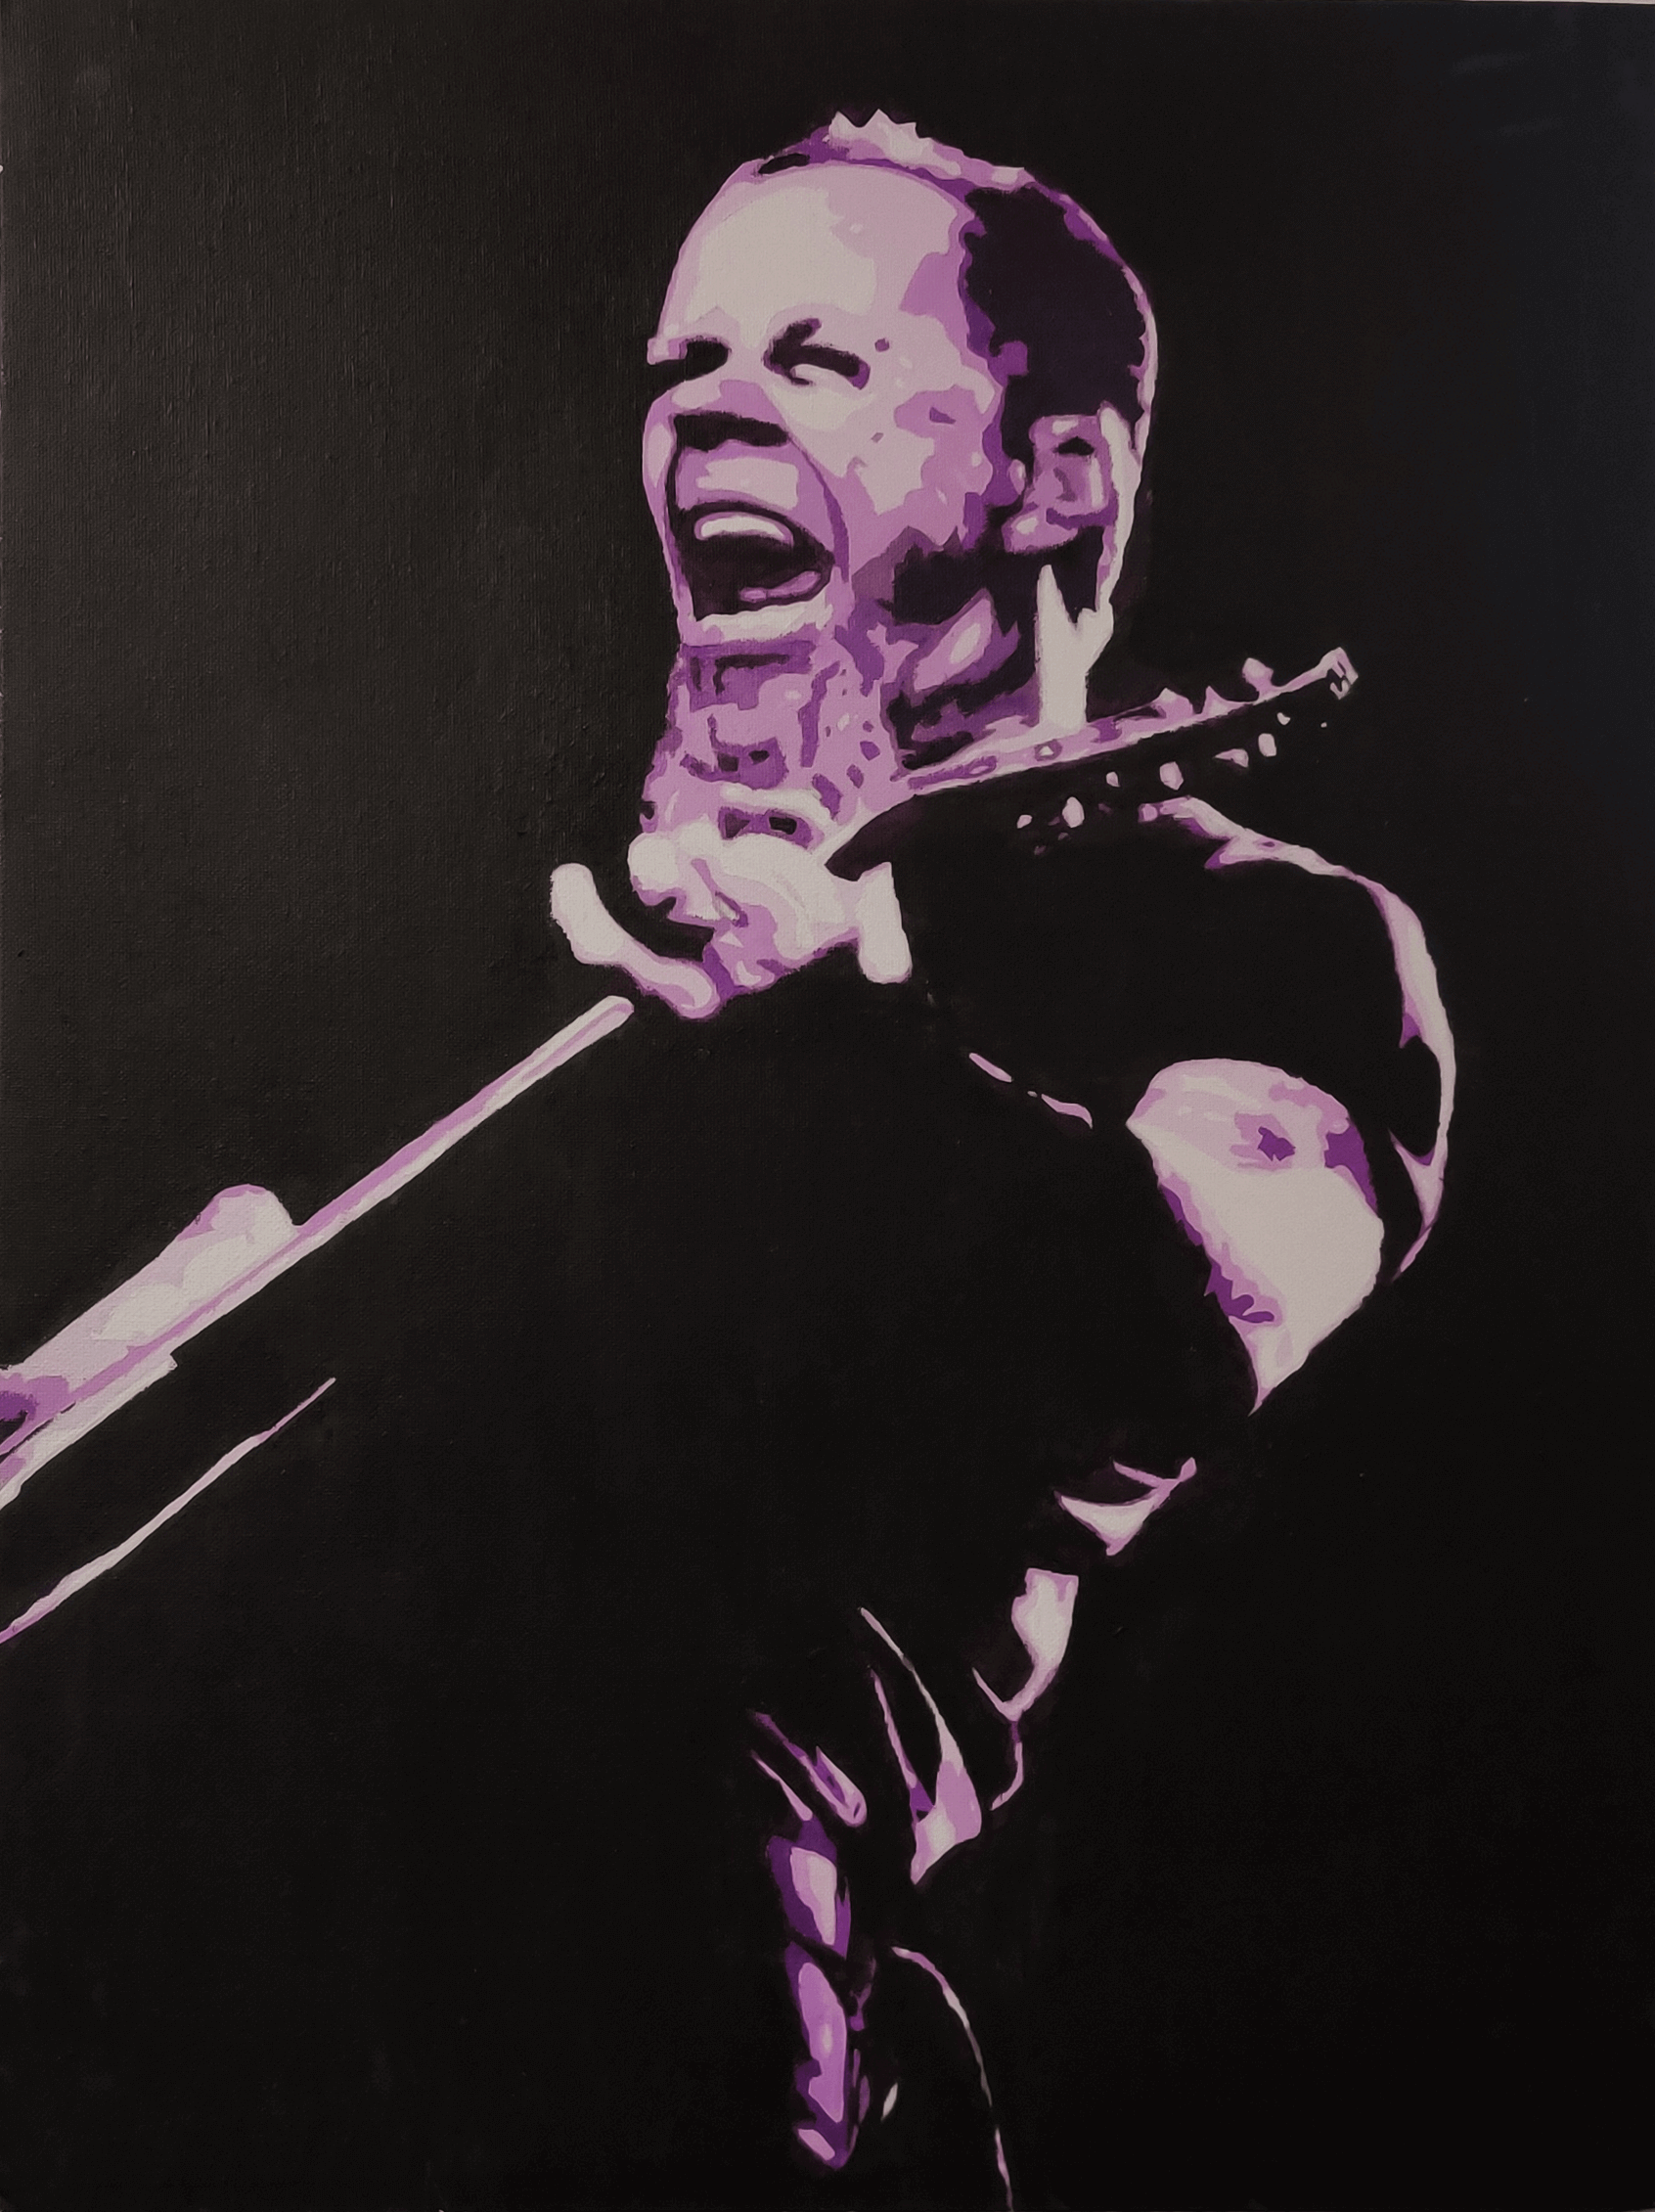 A stylized purple painting of James Hetfield, lead singer of Metallica.